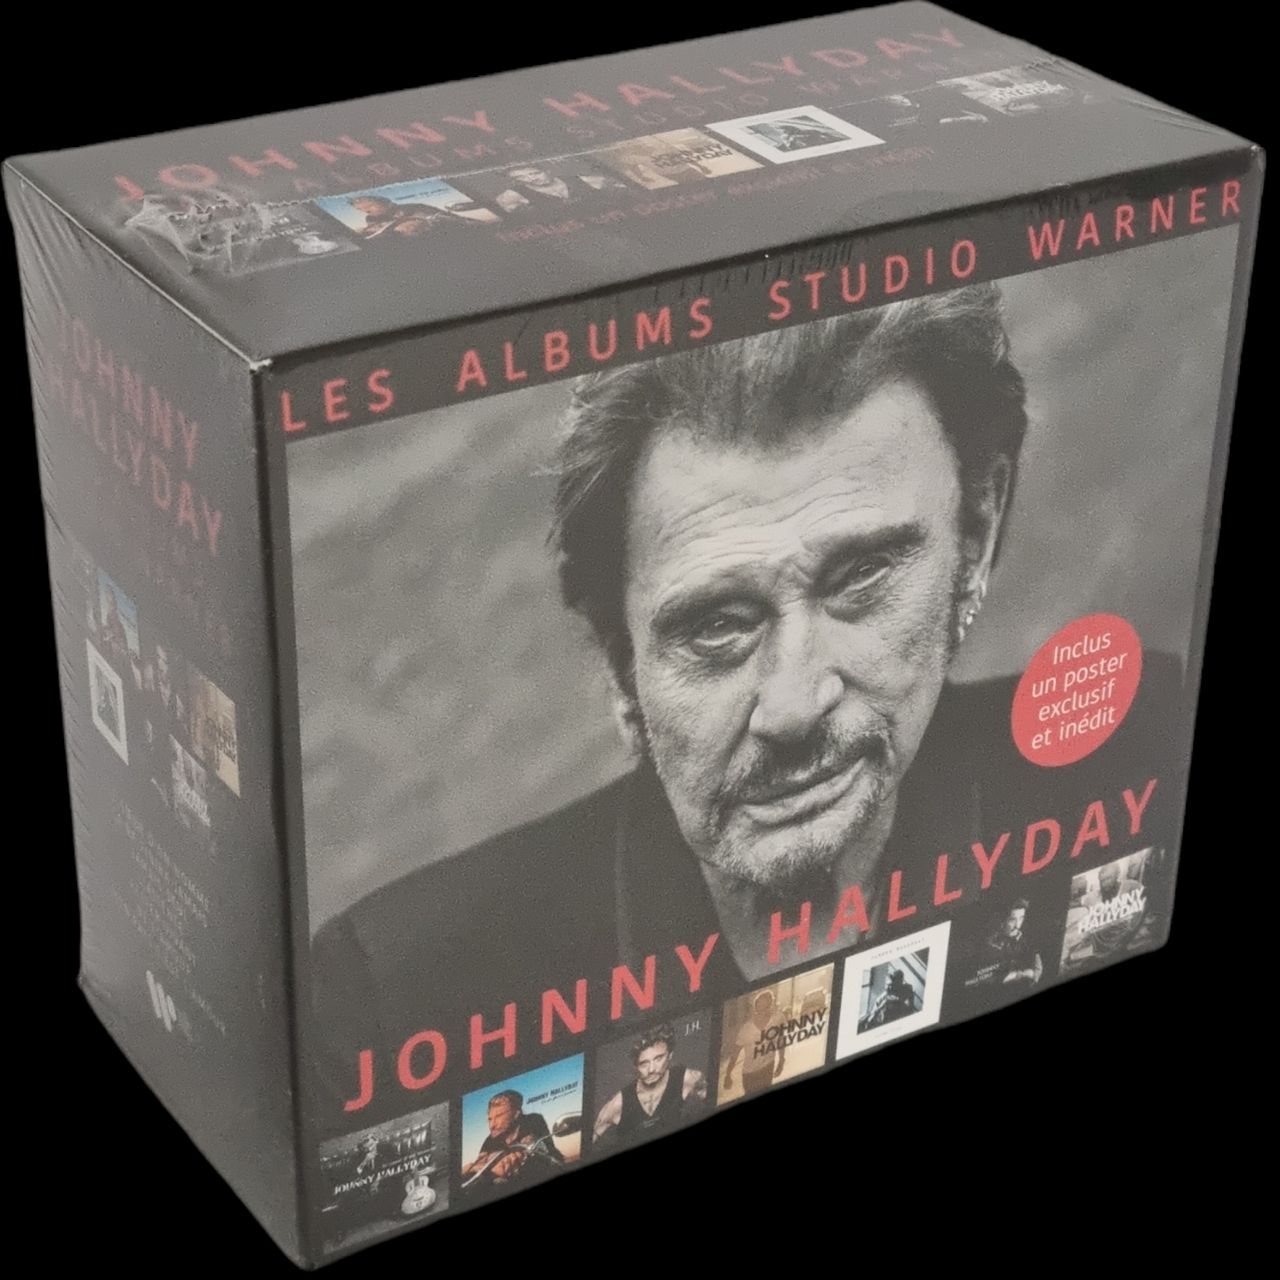 Johnny Hallyday Les Albums Studio Warner French CD Album Box Set 190295195359